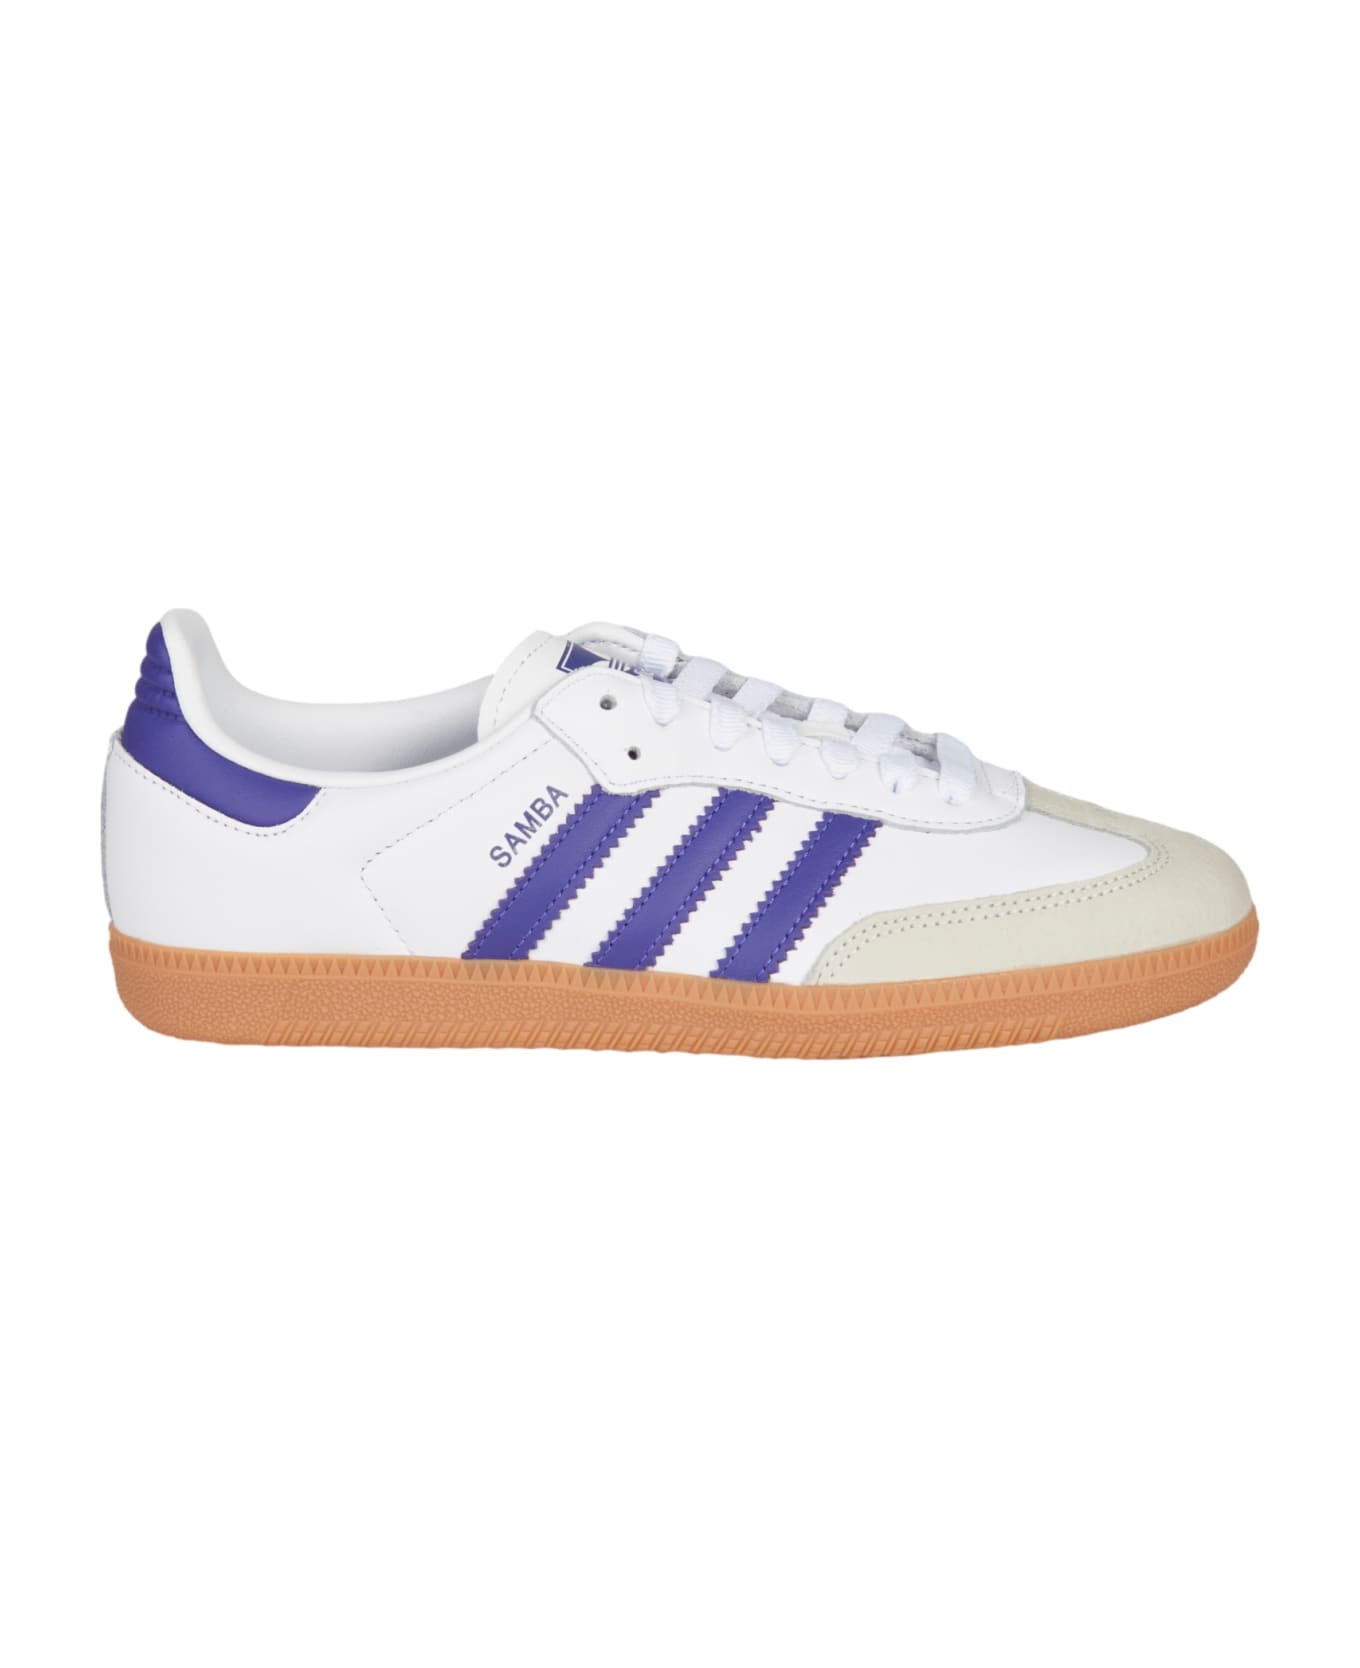 Adidas Samba Og Sneakers - White